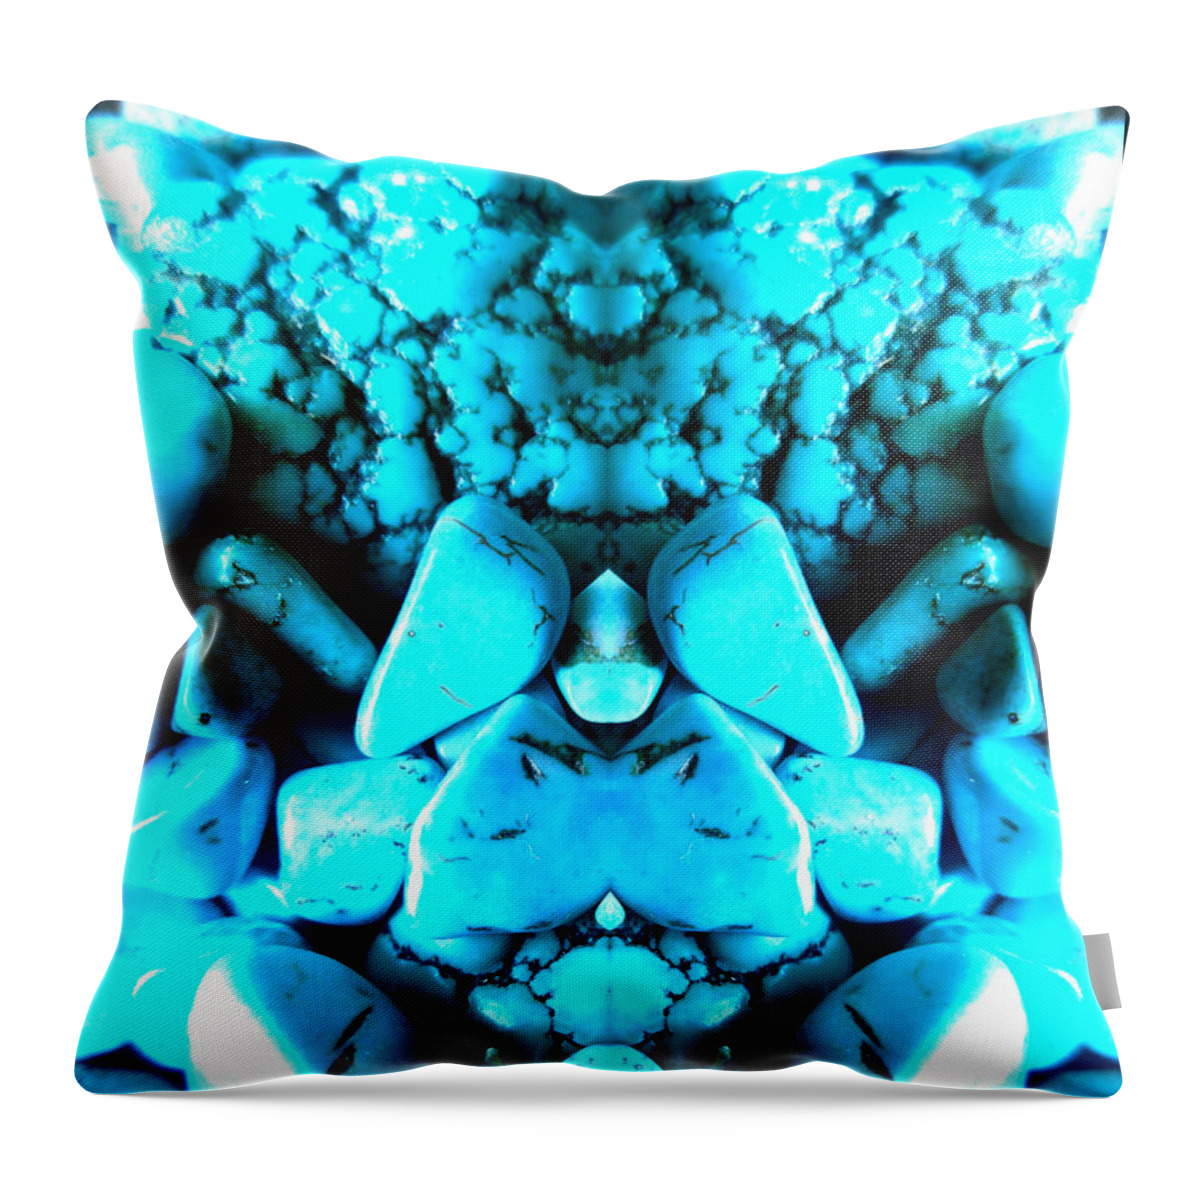 Turquoise Throw Pillow featuring the photograph Turquoise Titan by Stephenie Zagorski